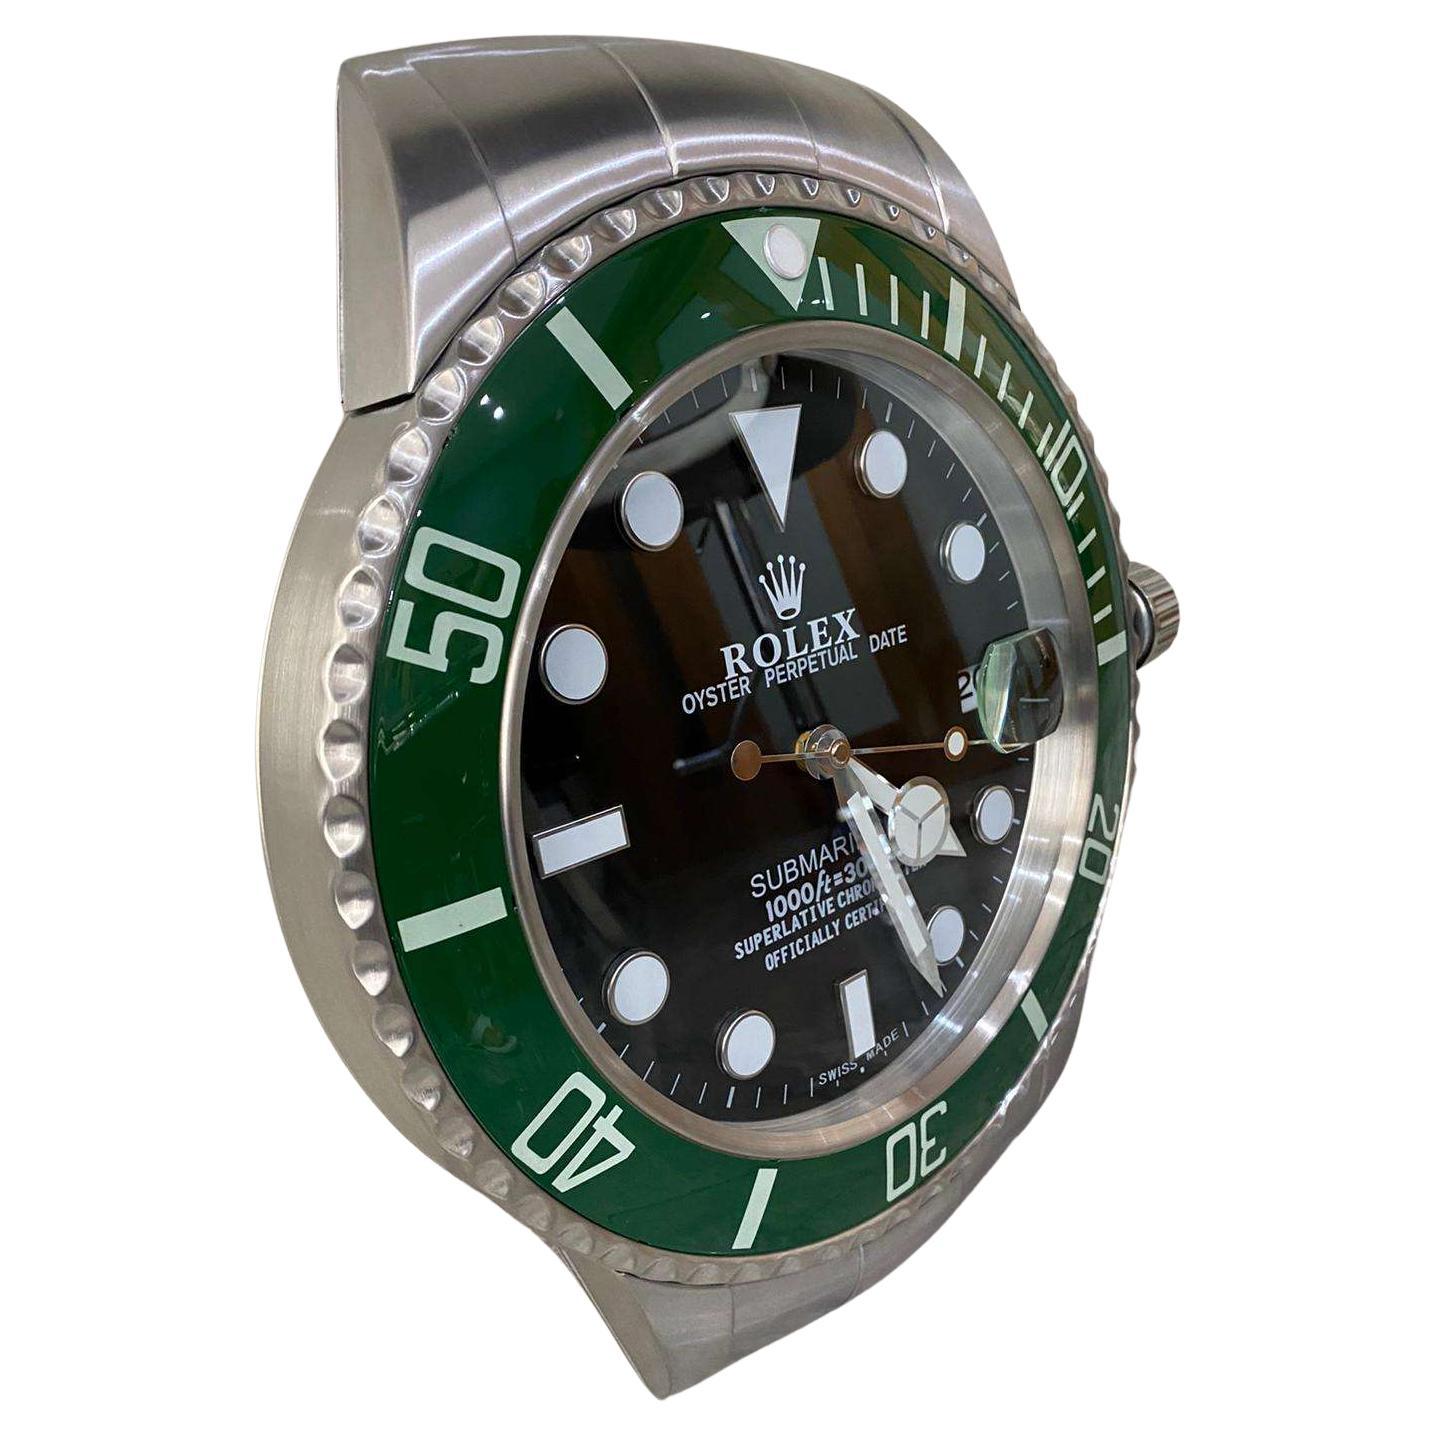 Horloge murale ROLEX Oyster Perpetual Green Submariner certifiée officiellement 